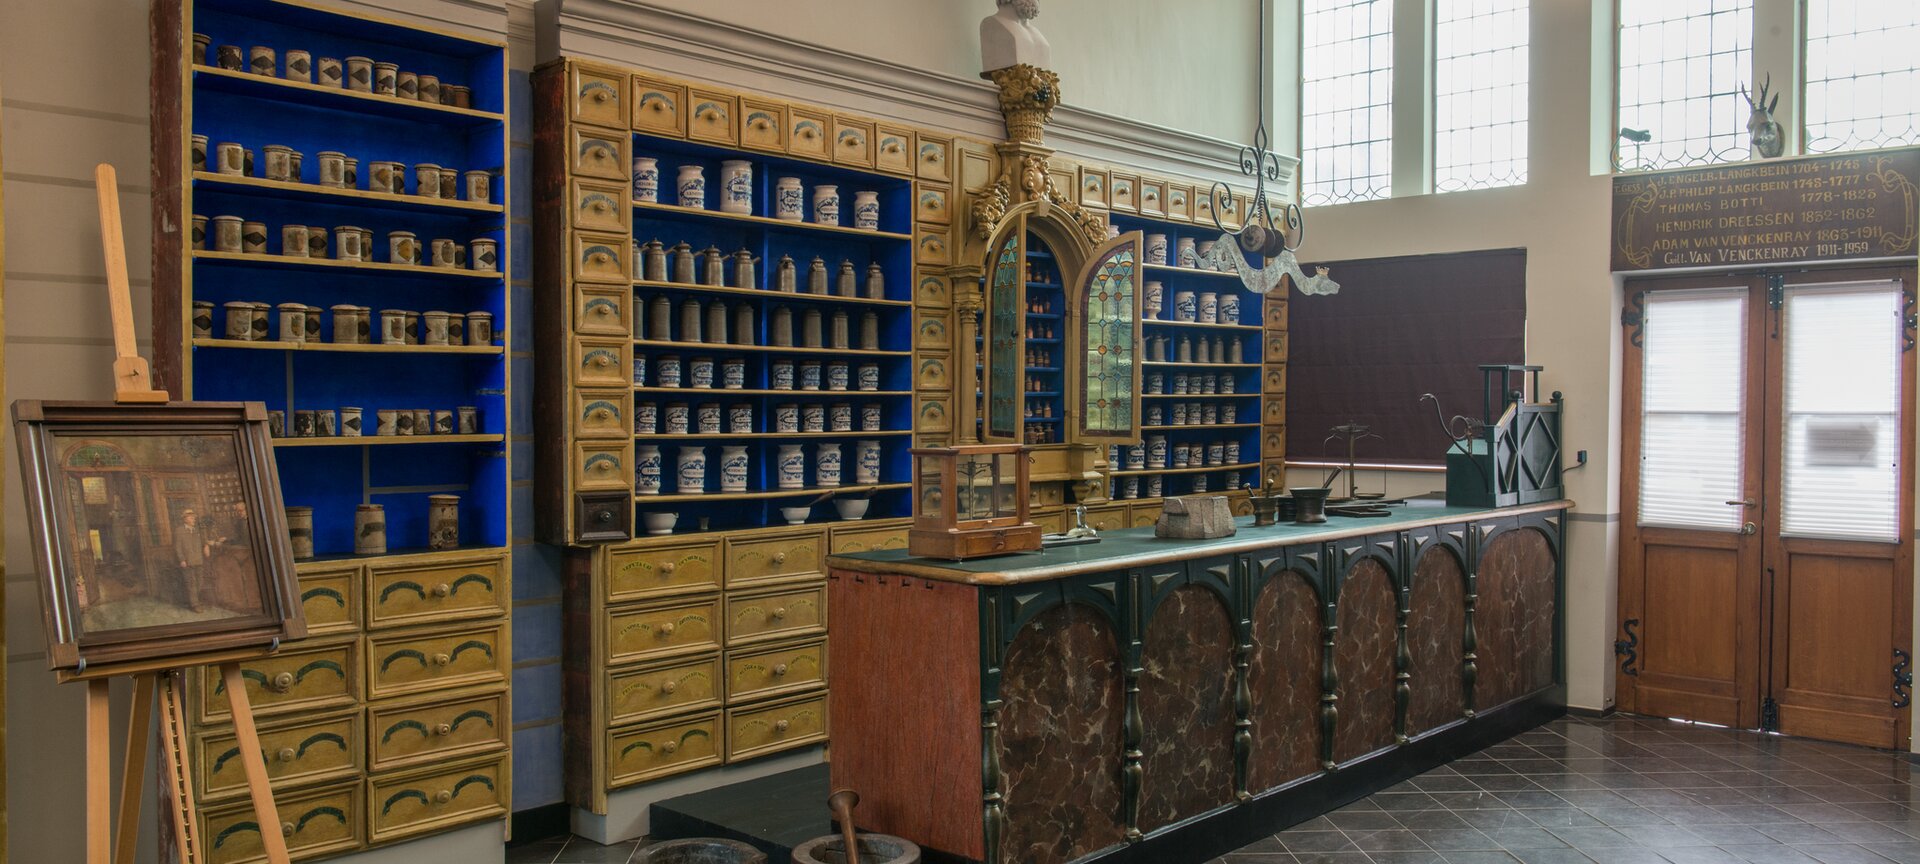 Oudste privéapotheekmuseum van België - Apotheekmuseum